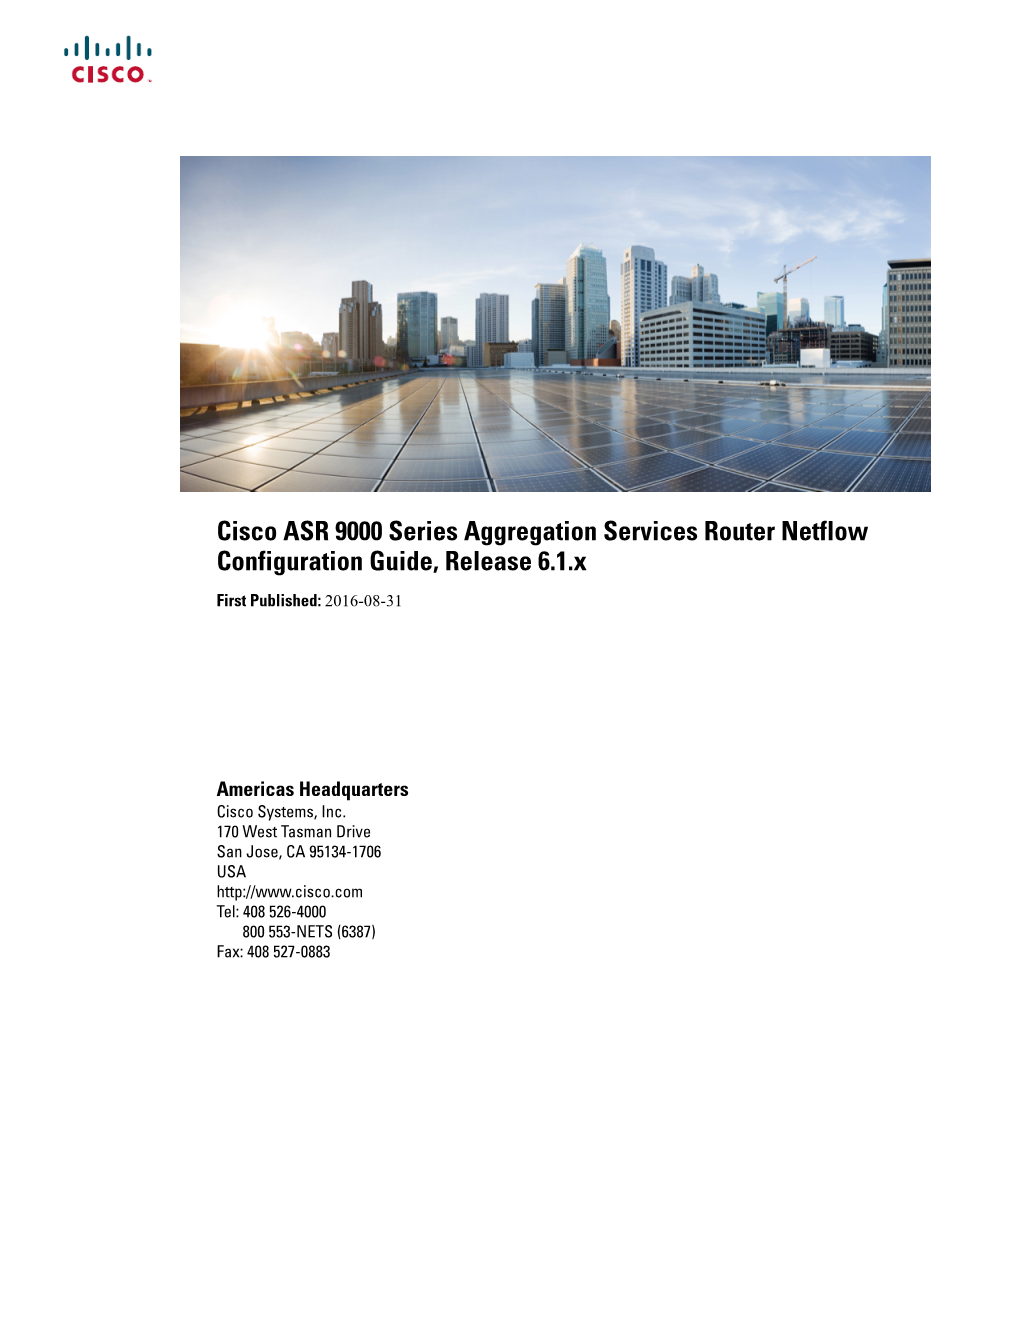 Cisco ASR 9000 Series Aggregation Services Router Netflow Configuration Guide, Release 6.1.X